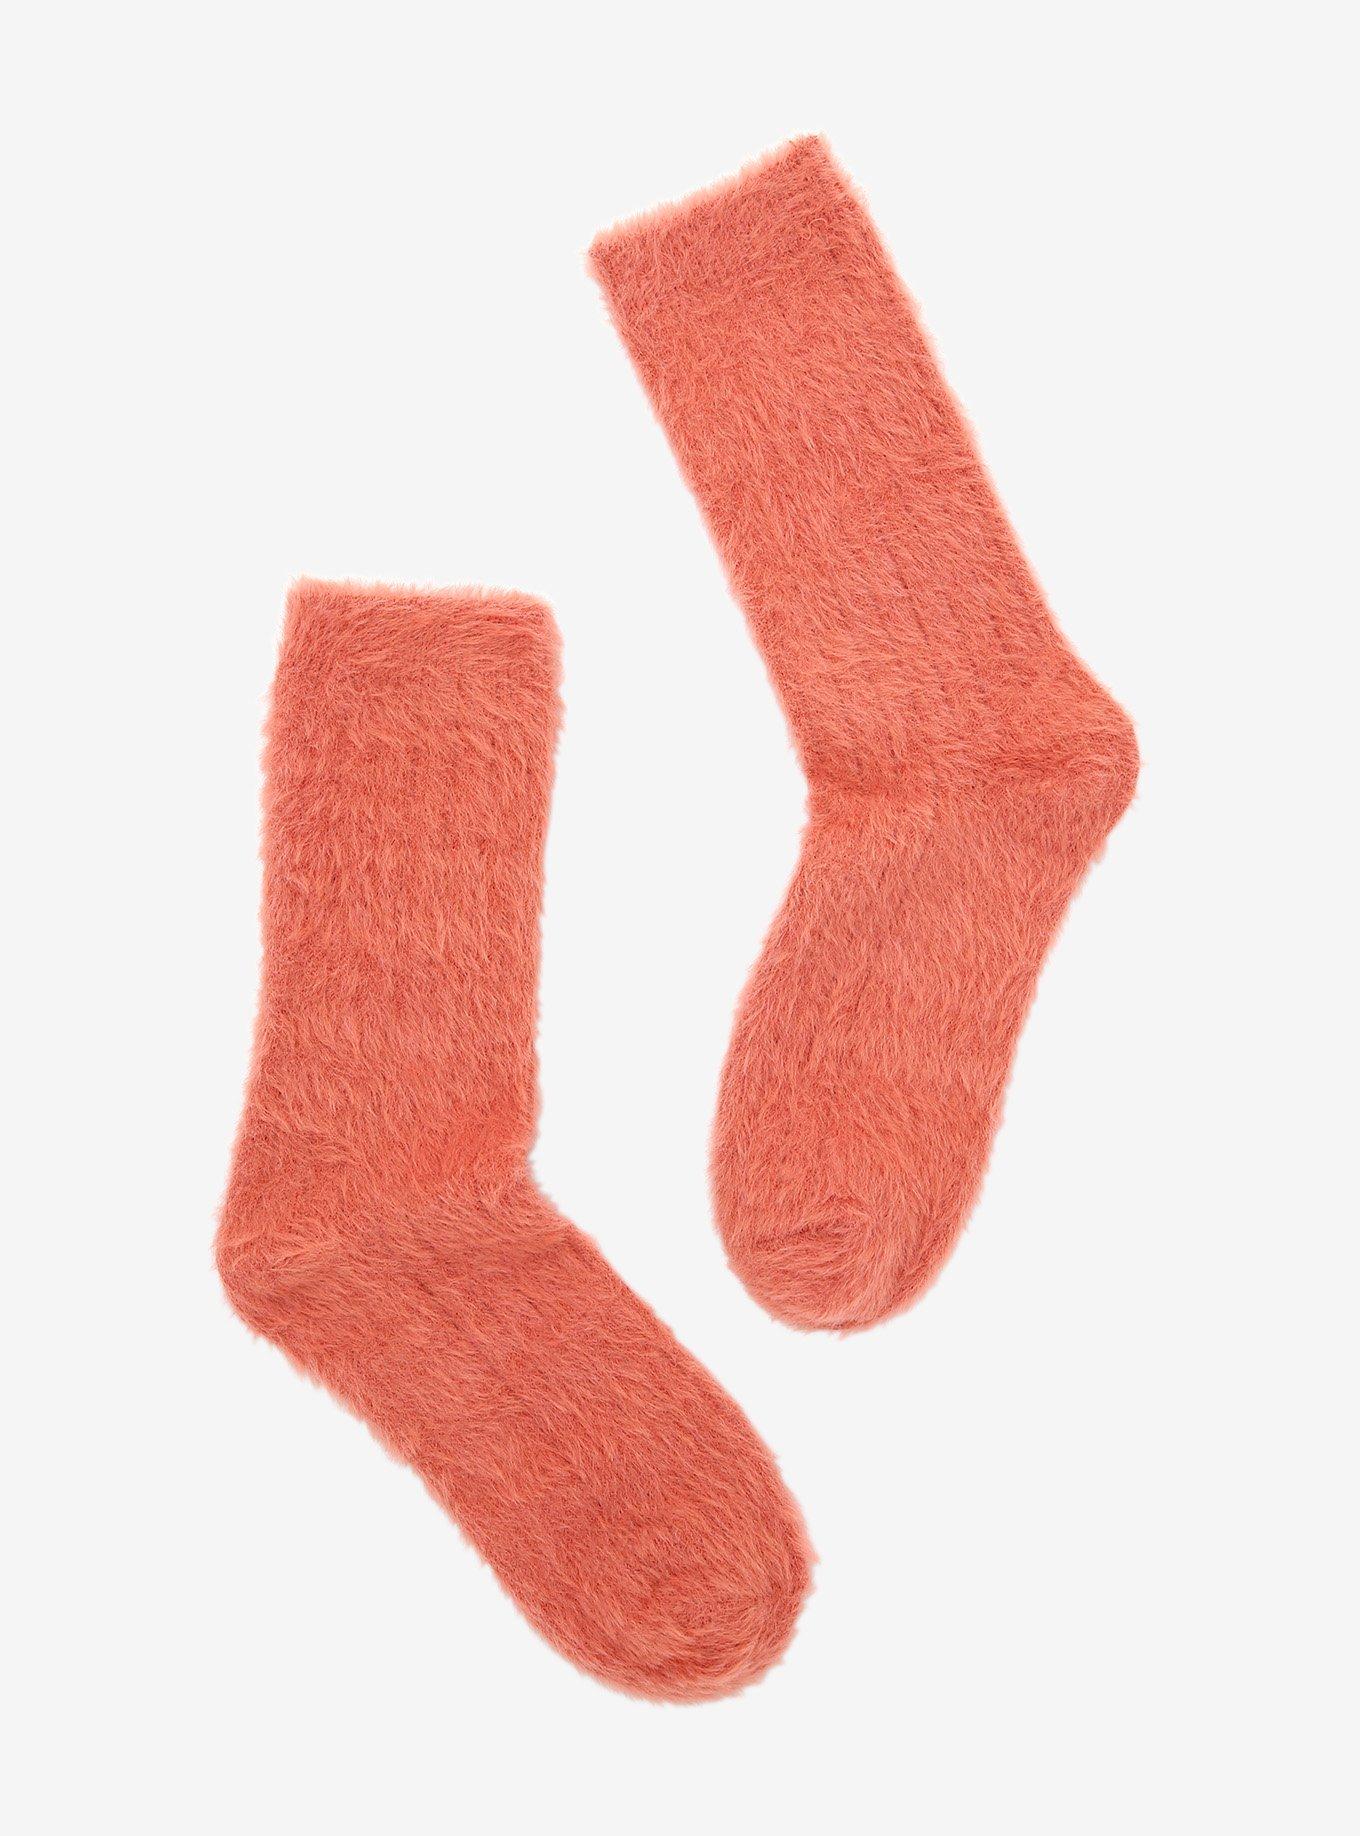 Dusty Rose Fuzzy Crew Socks, , hi-res